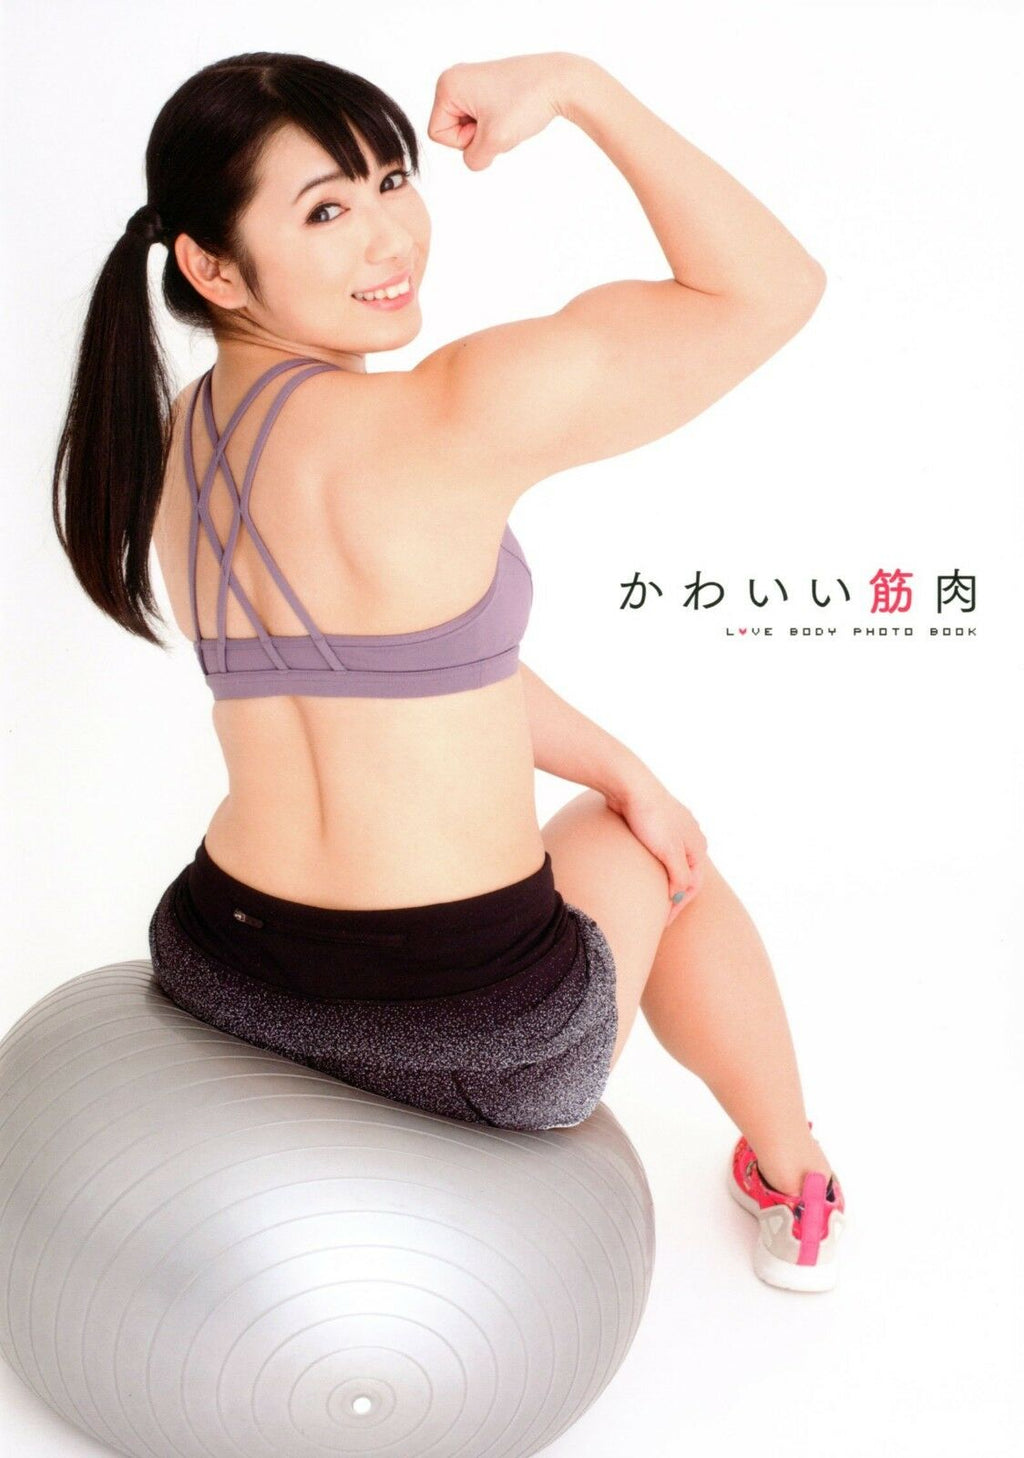 NEW Cute Muscle Girls Photo Book | Japan Reika Saiki Emi Yanagimoto